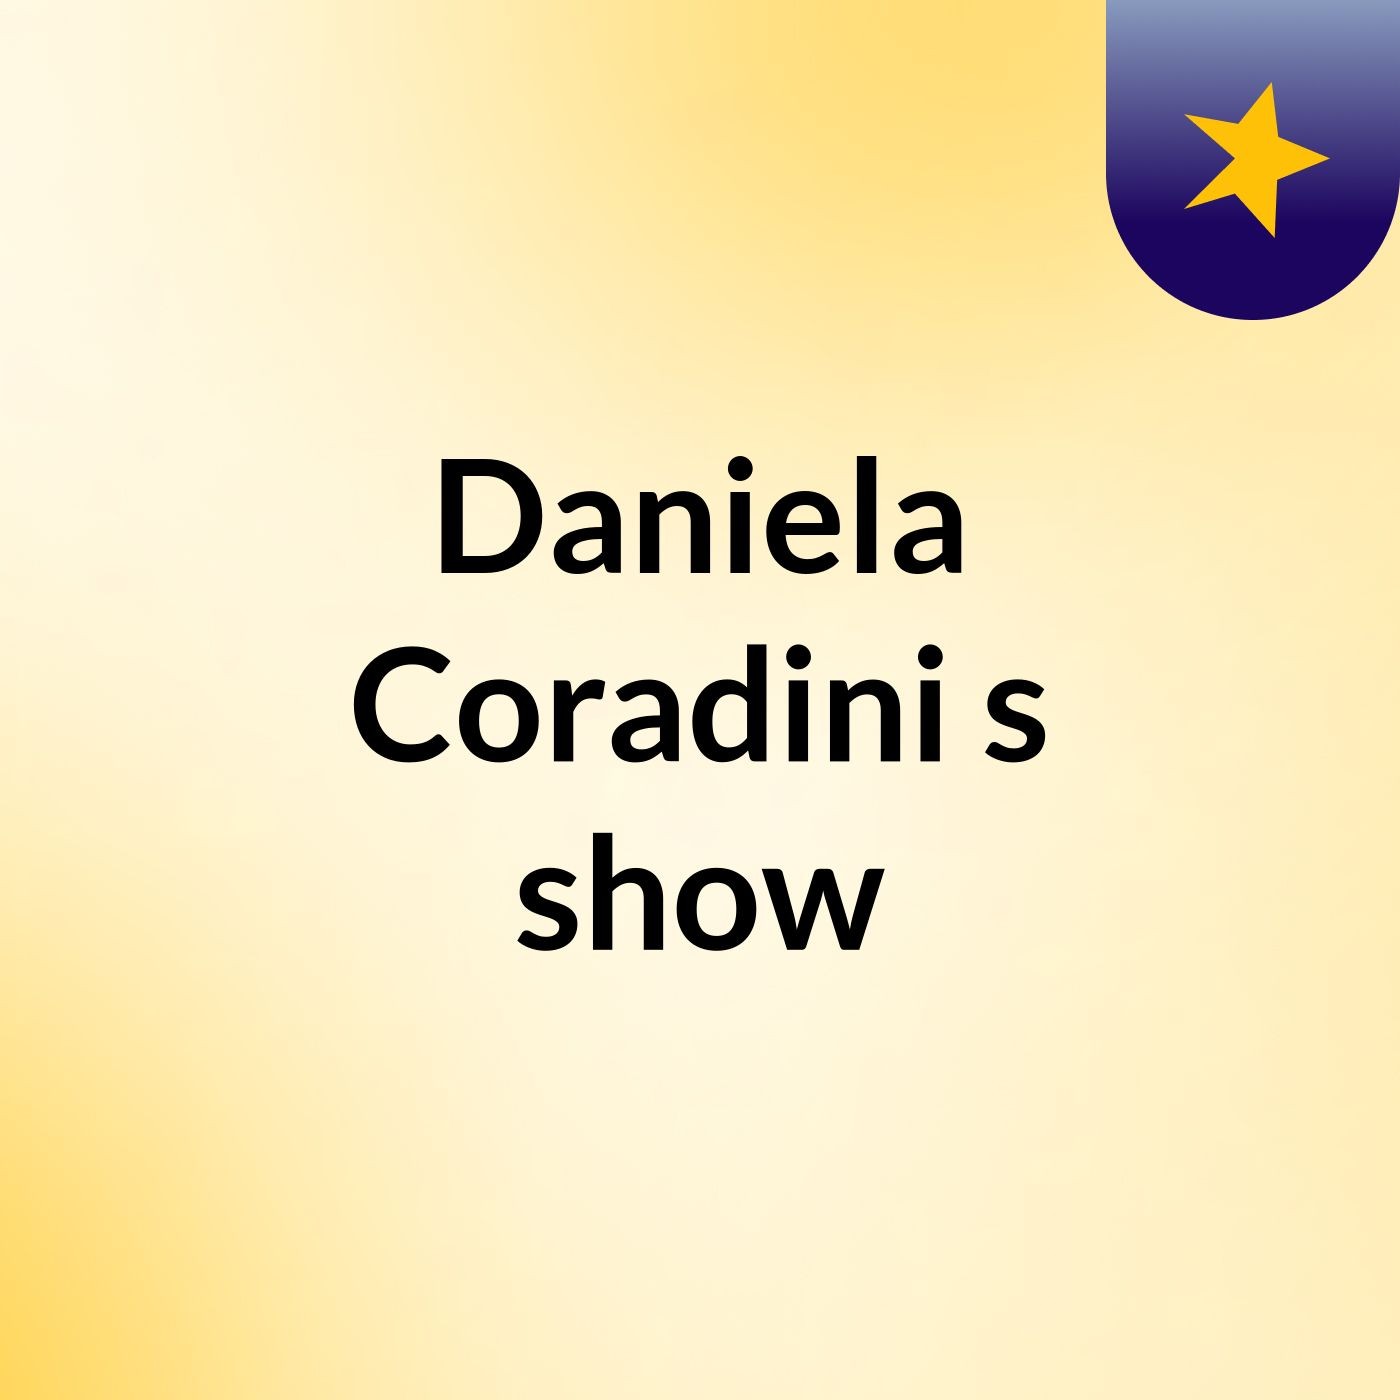 Daniela Coradini's show